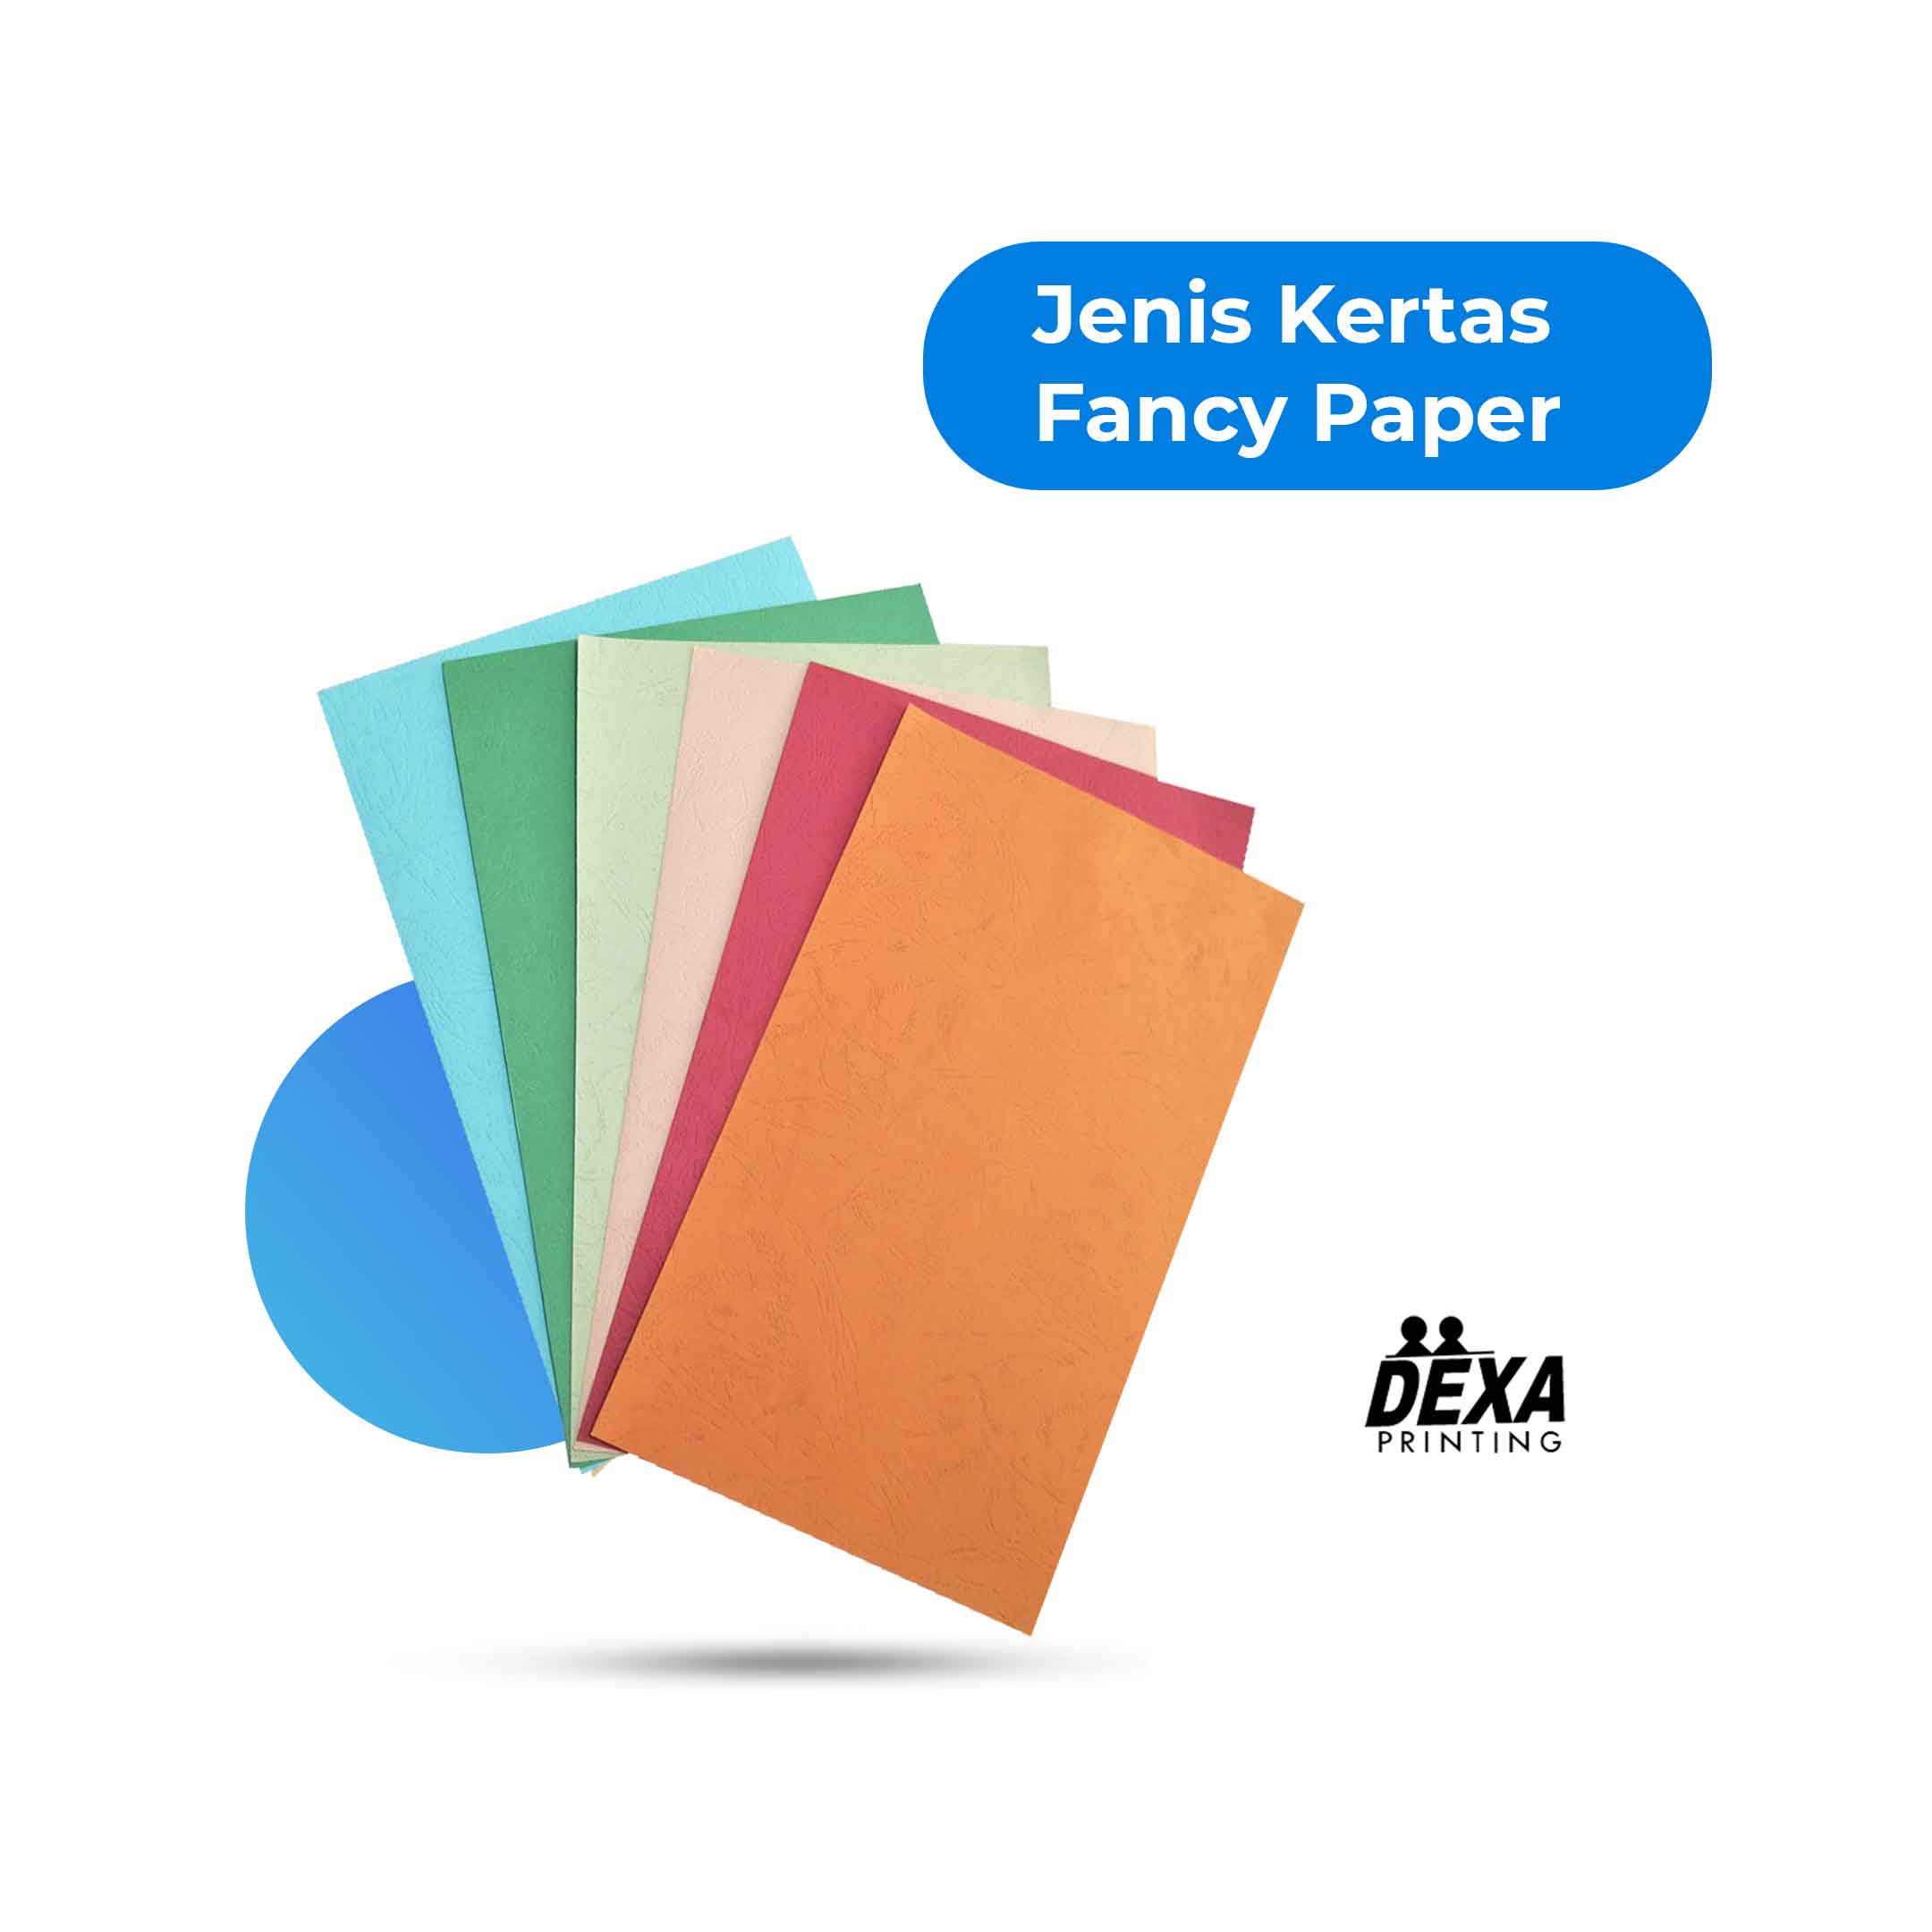 Jenis Kertas Fancy Paper - Dexa Printing Bandung